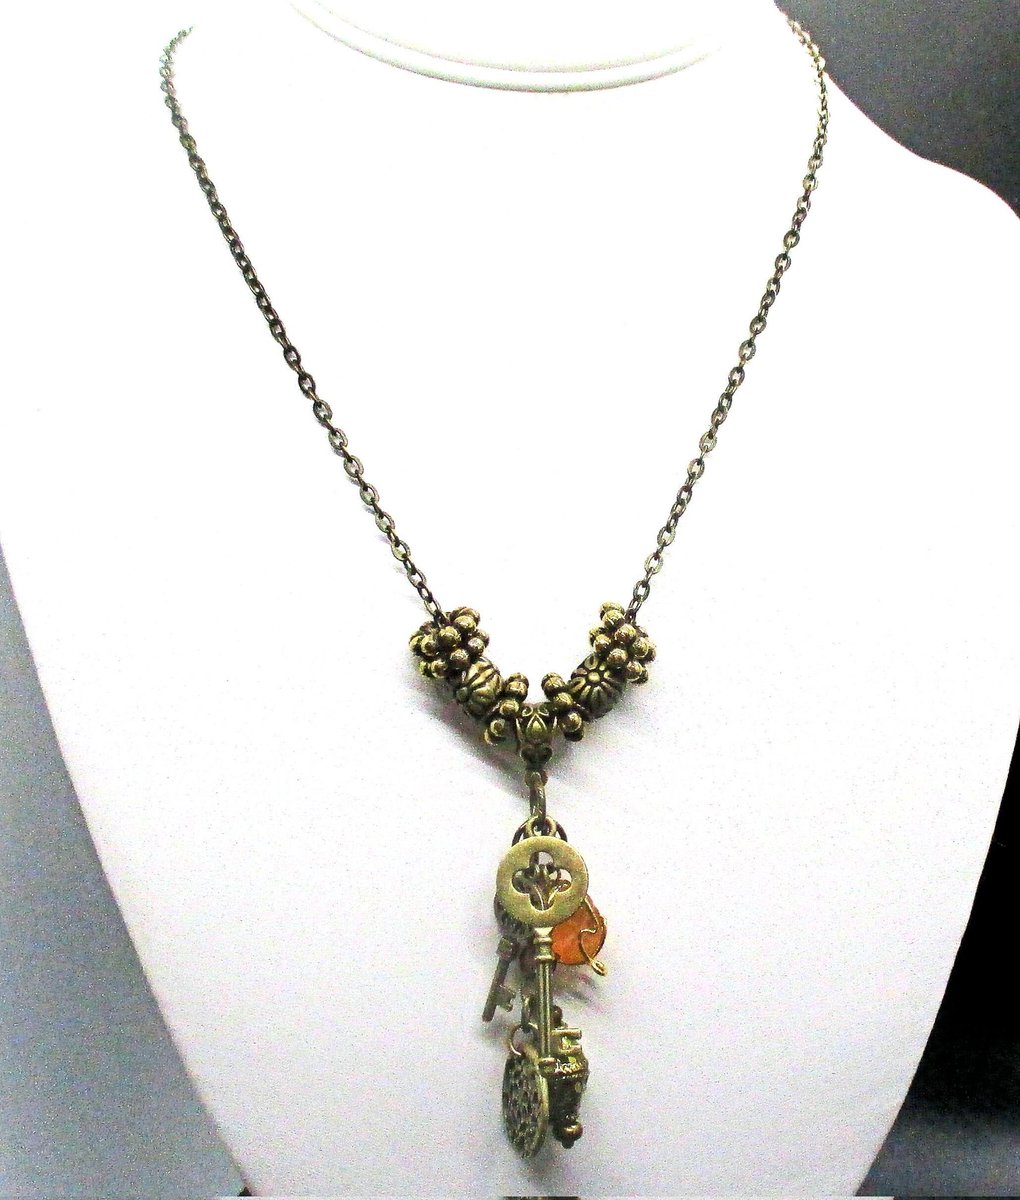 jewelrybyscotti.etsy.com/listing/139278…

Key Charm Pendant Necklace

#jewelrybyscotti #wiseshopper #chainnecklace #keynecklace